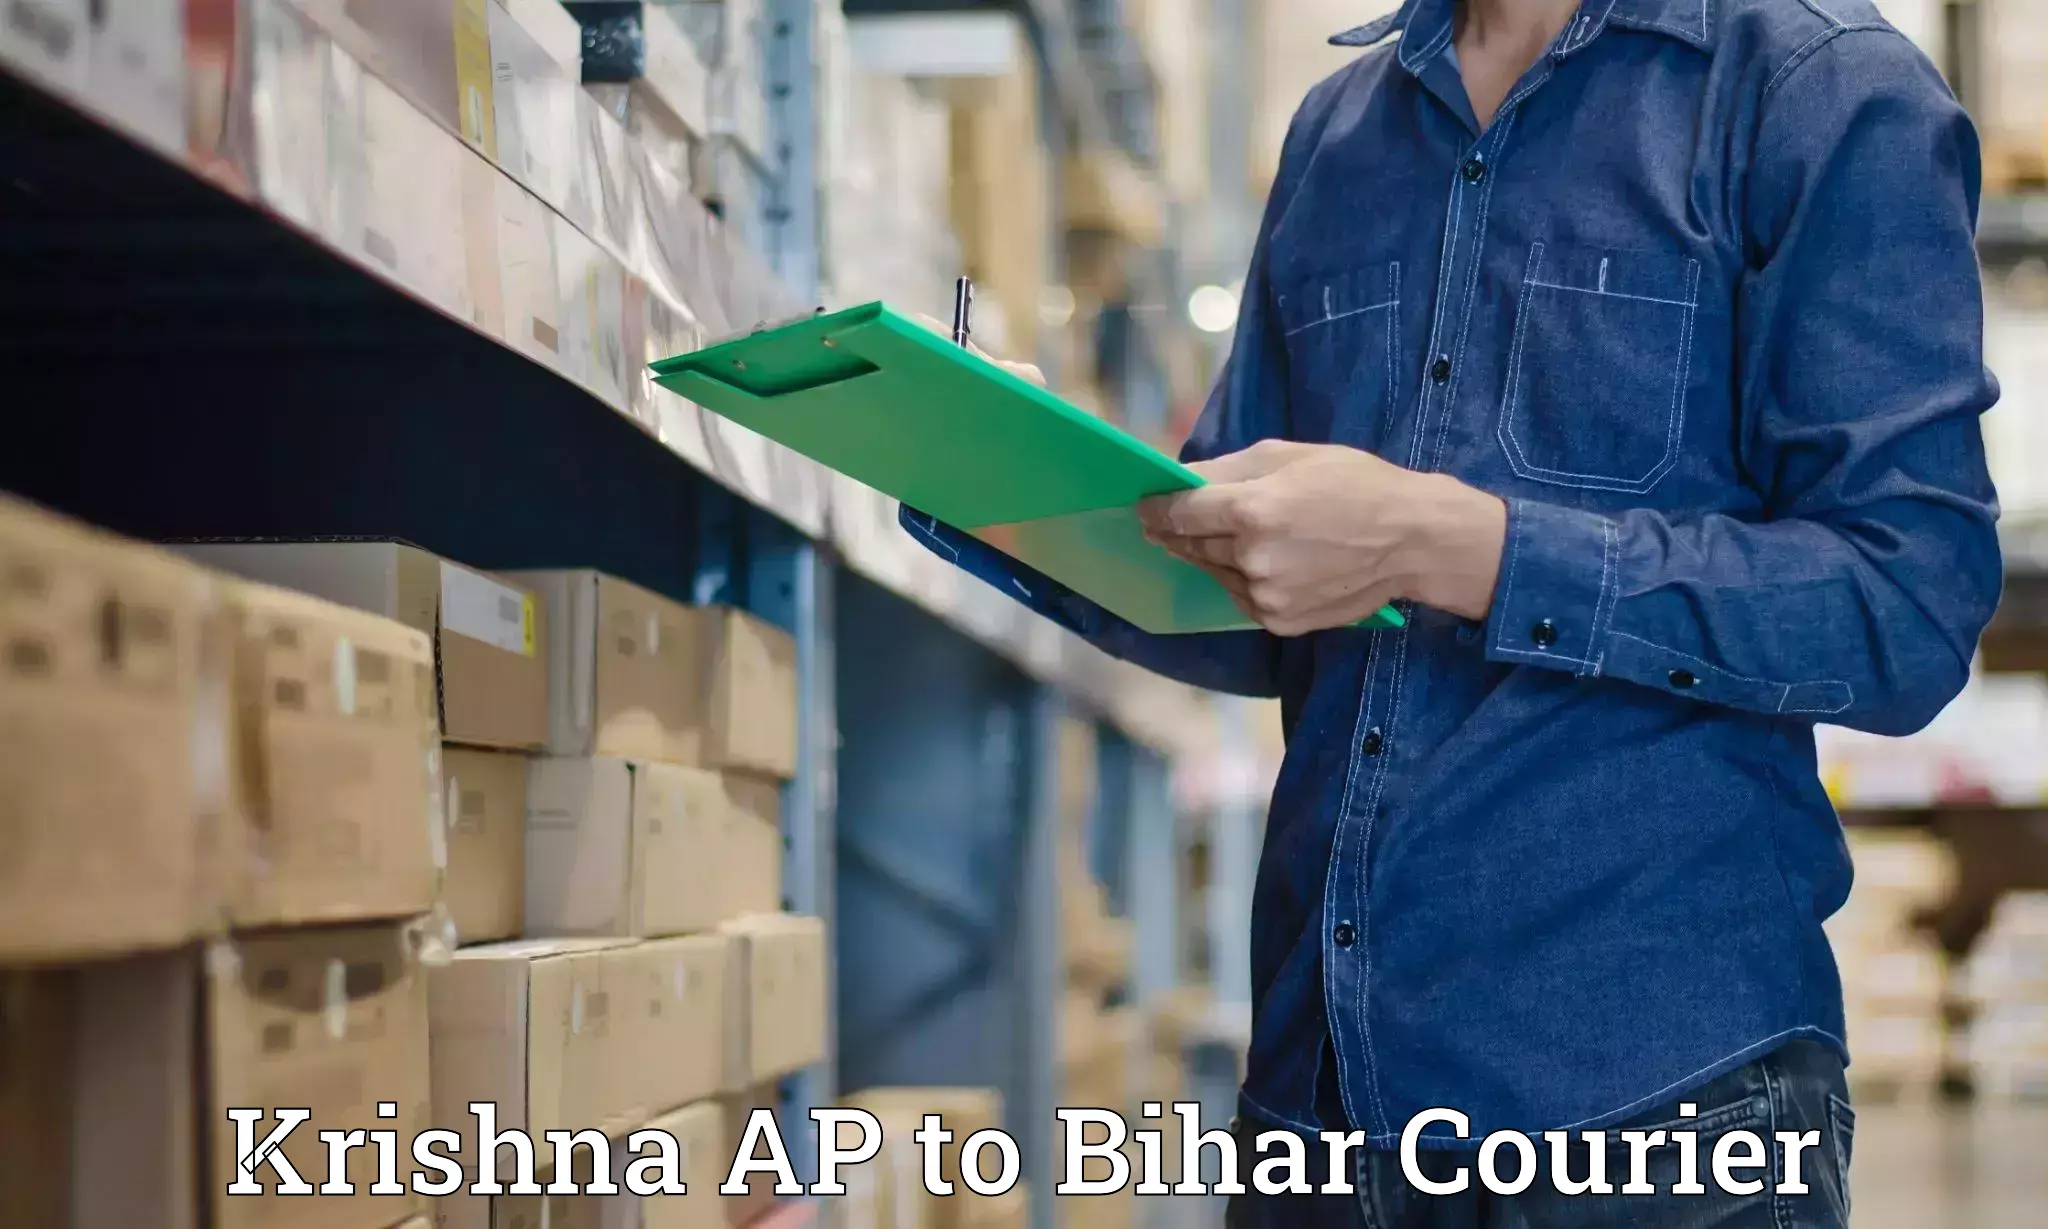 Courier app Krishna AP to Chainpur